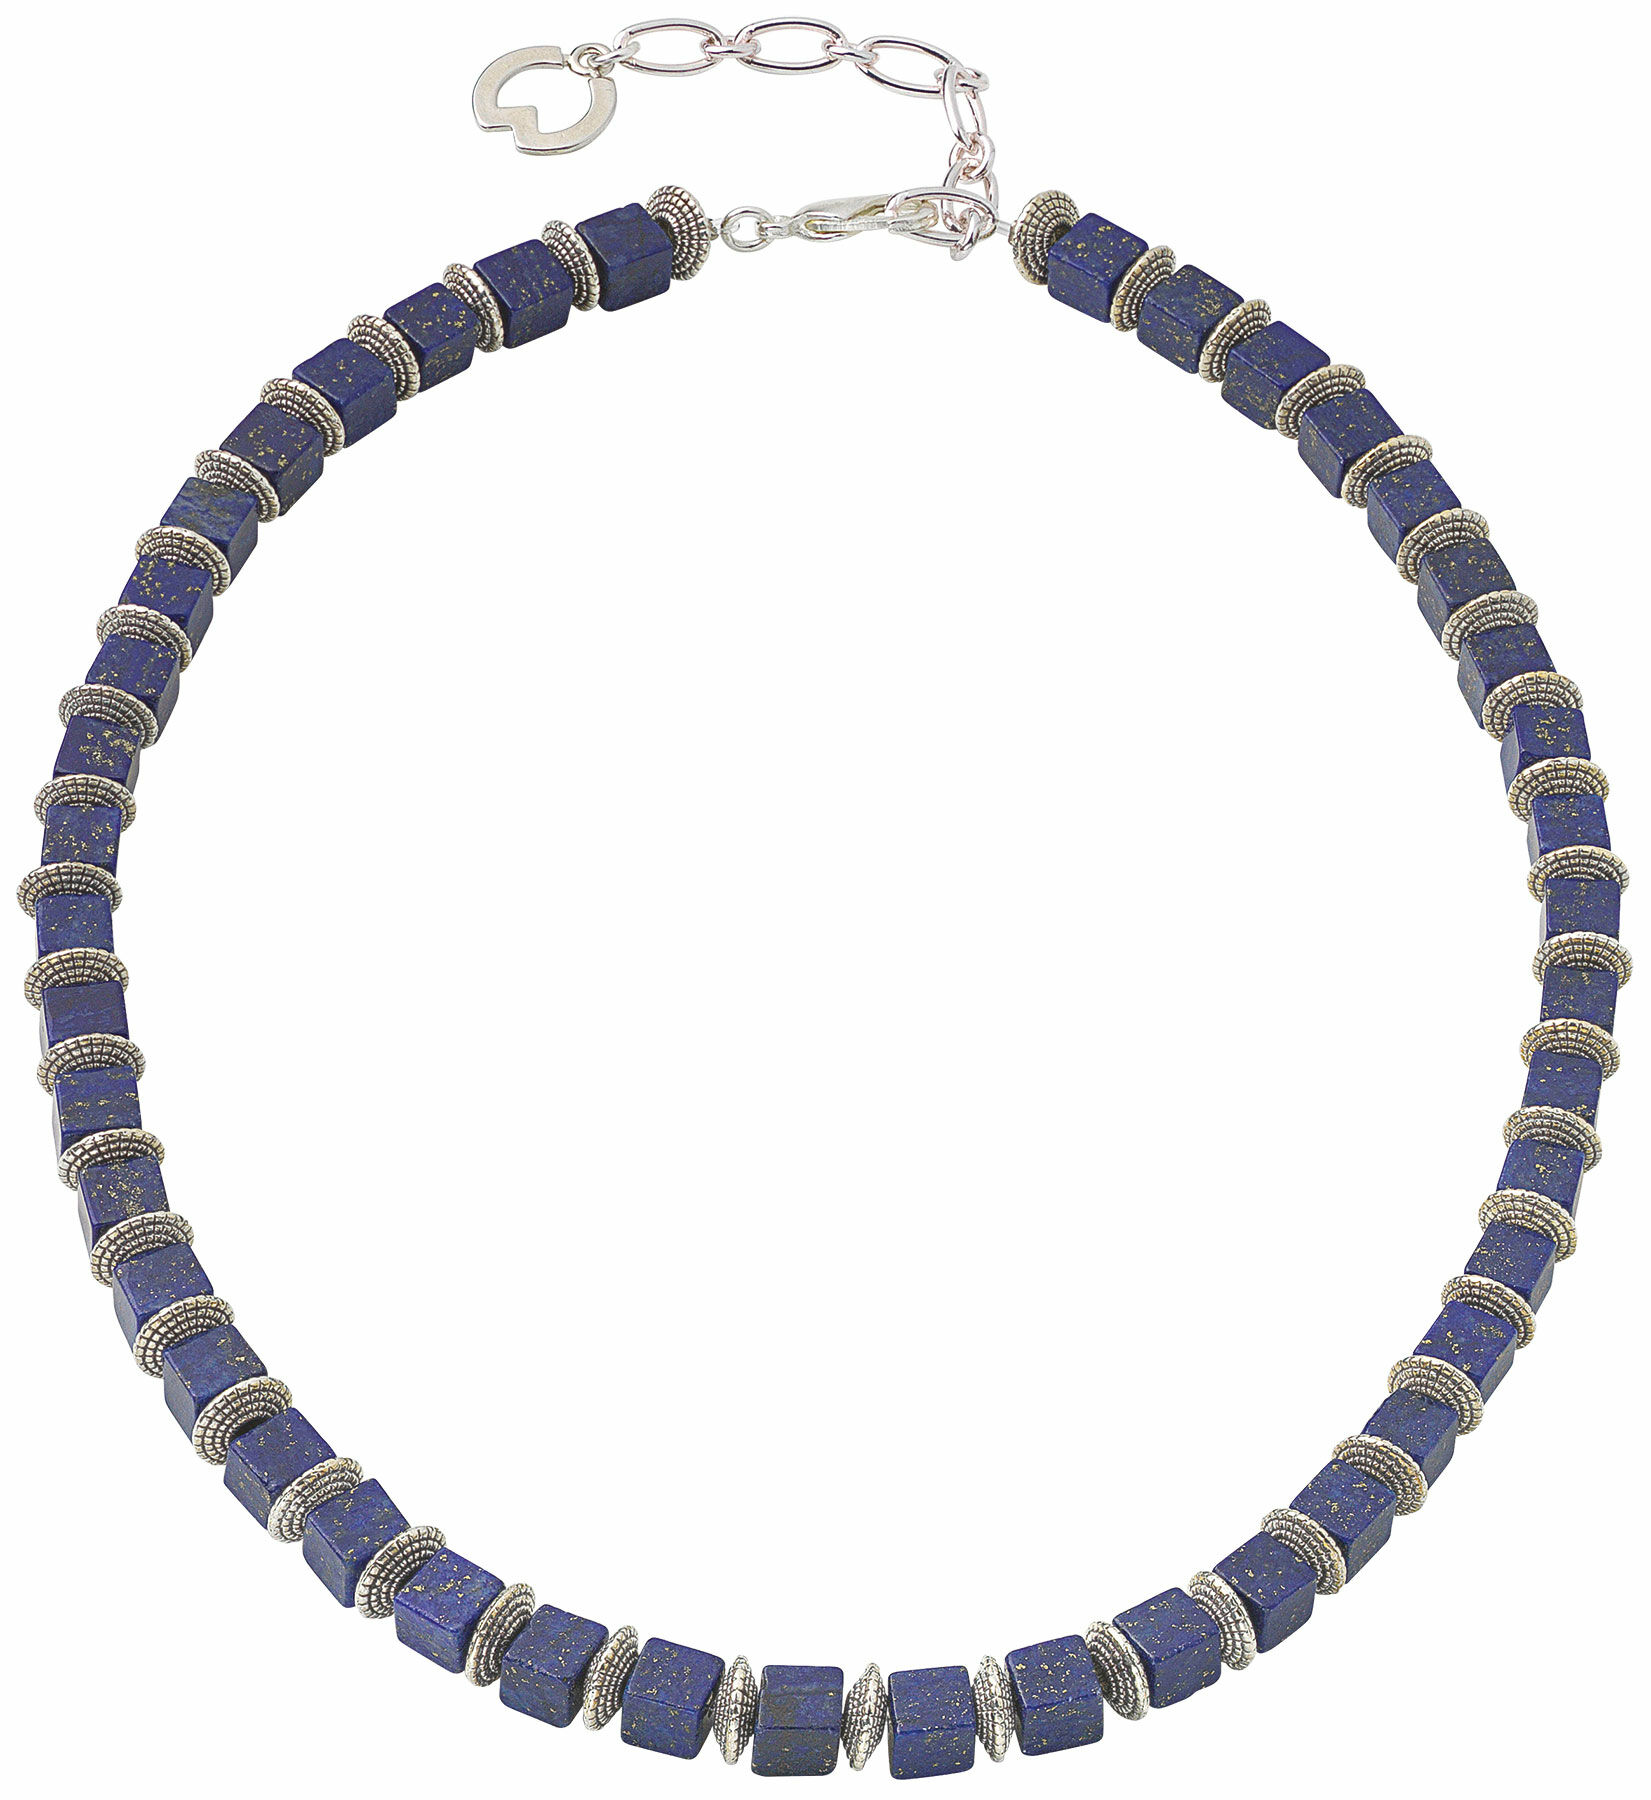 Necklace "Midnight Blue" by Petra Waszak